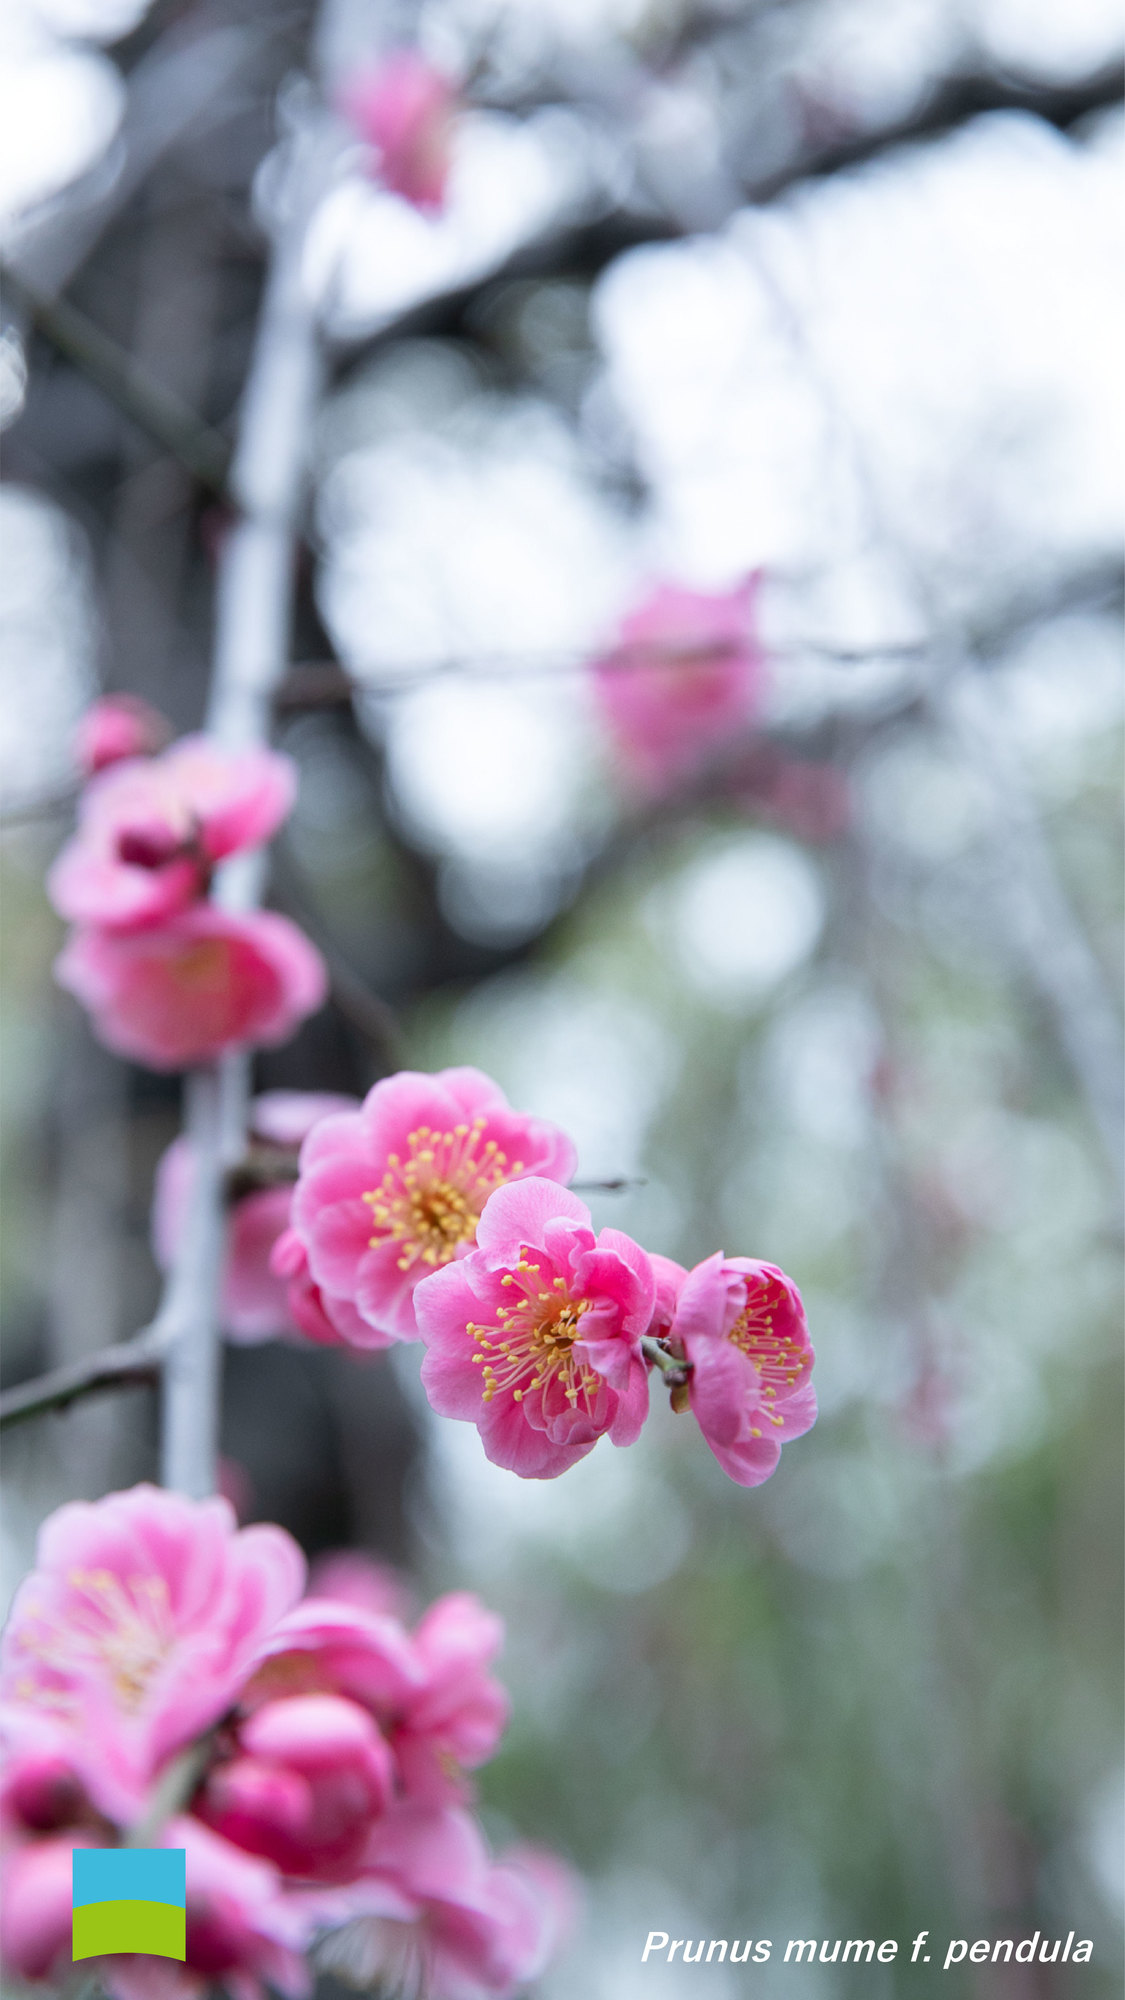 【X peria対応】Prunus mume f. pendula【3月】